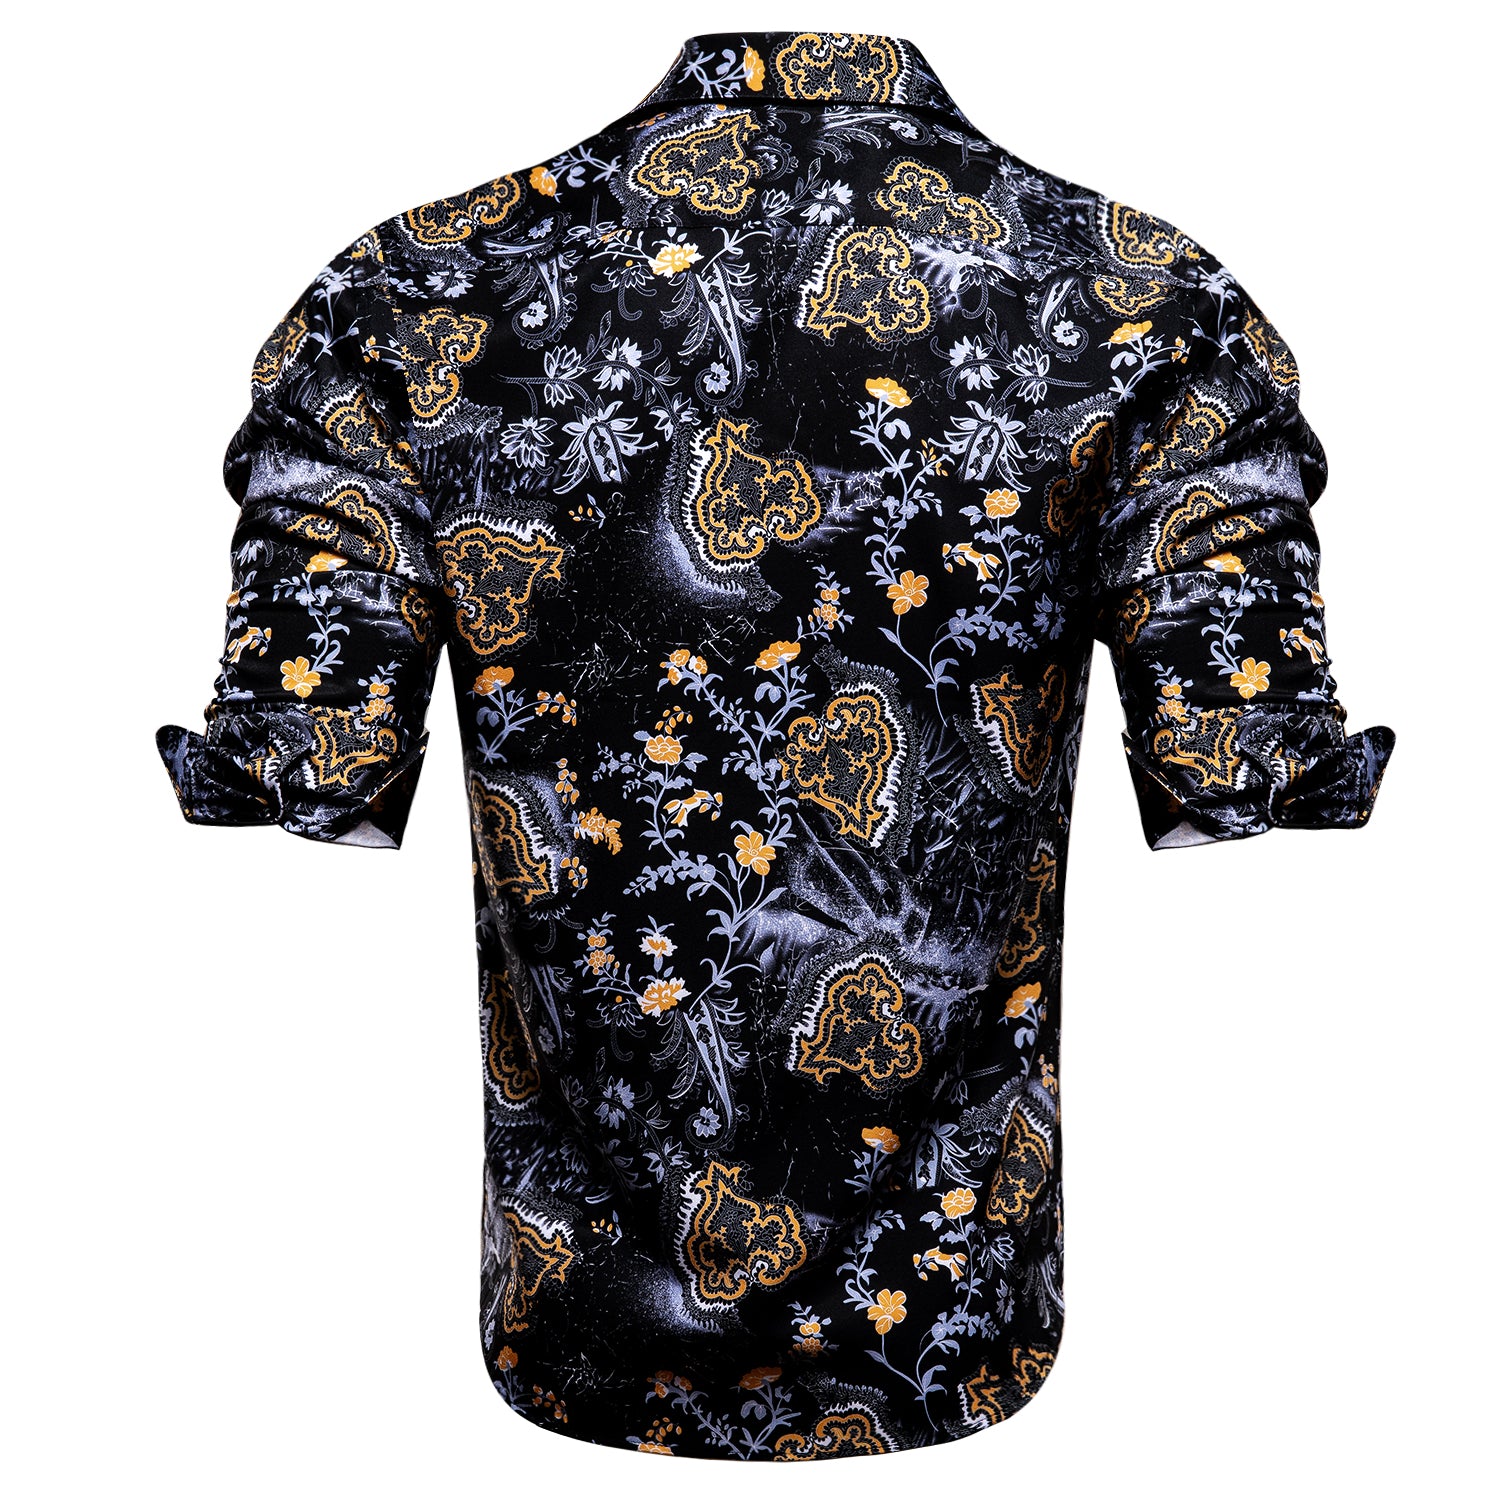 Clearance Sale New Black Golden Flame Print Novelty Men's Shirt